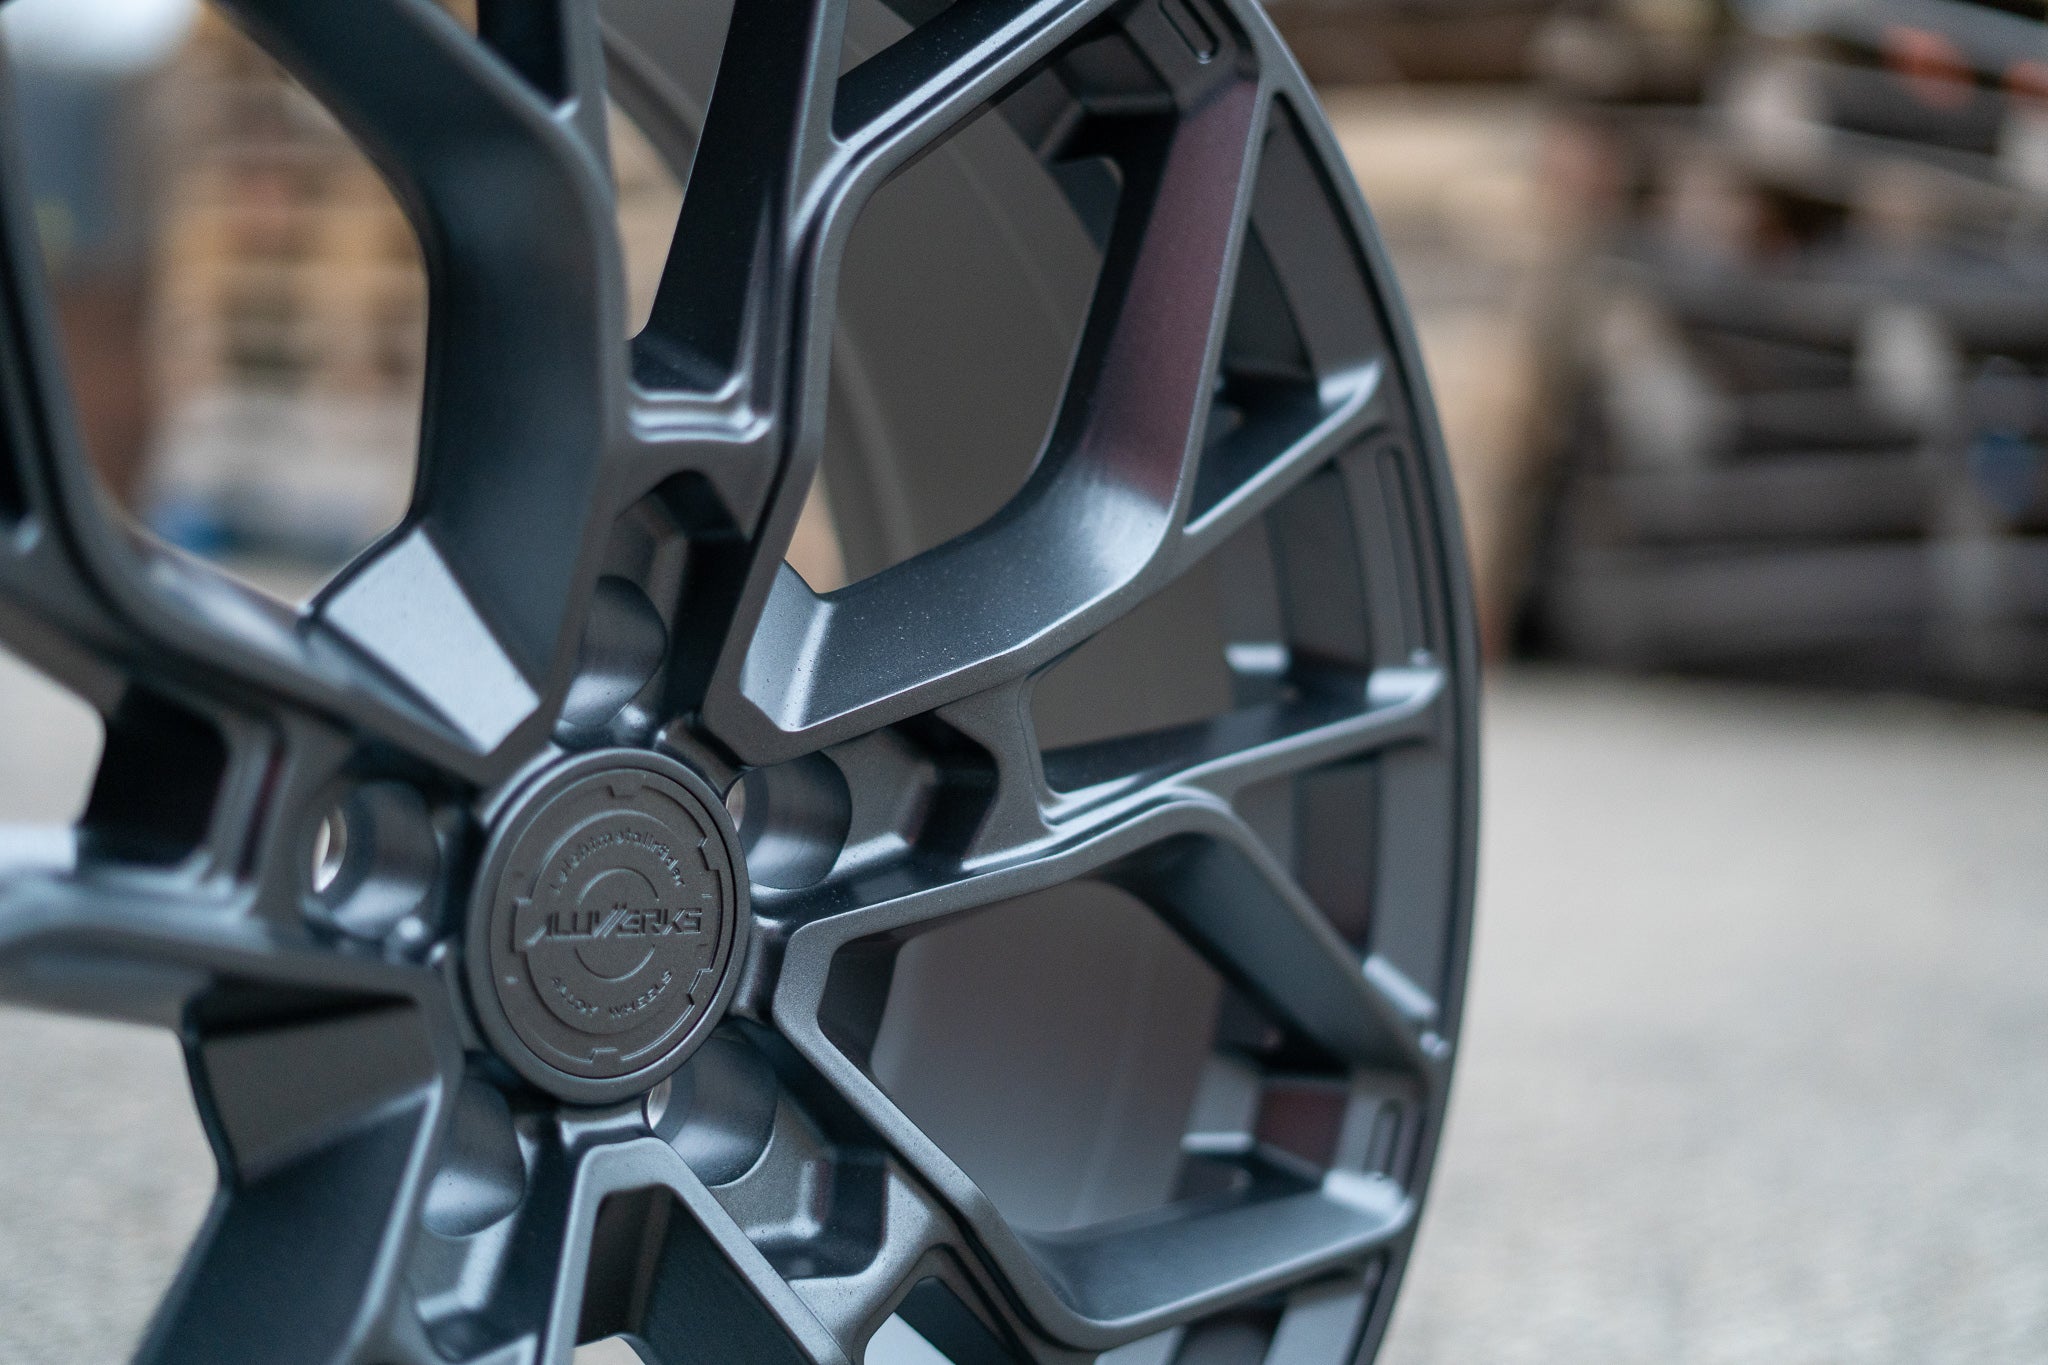 19” Aluwerks XT1-XL wheels  Magneto grey fits Audi BMW Mercedes VW Ford Vauxhall LOAD RATED 1000KG